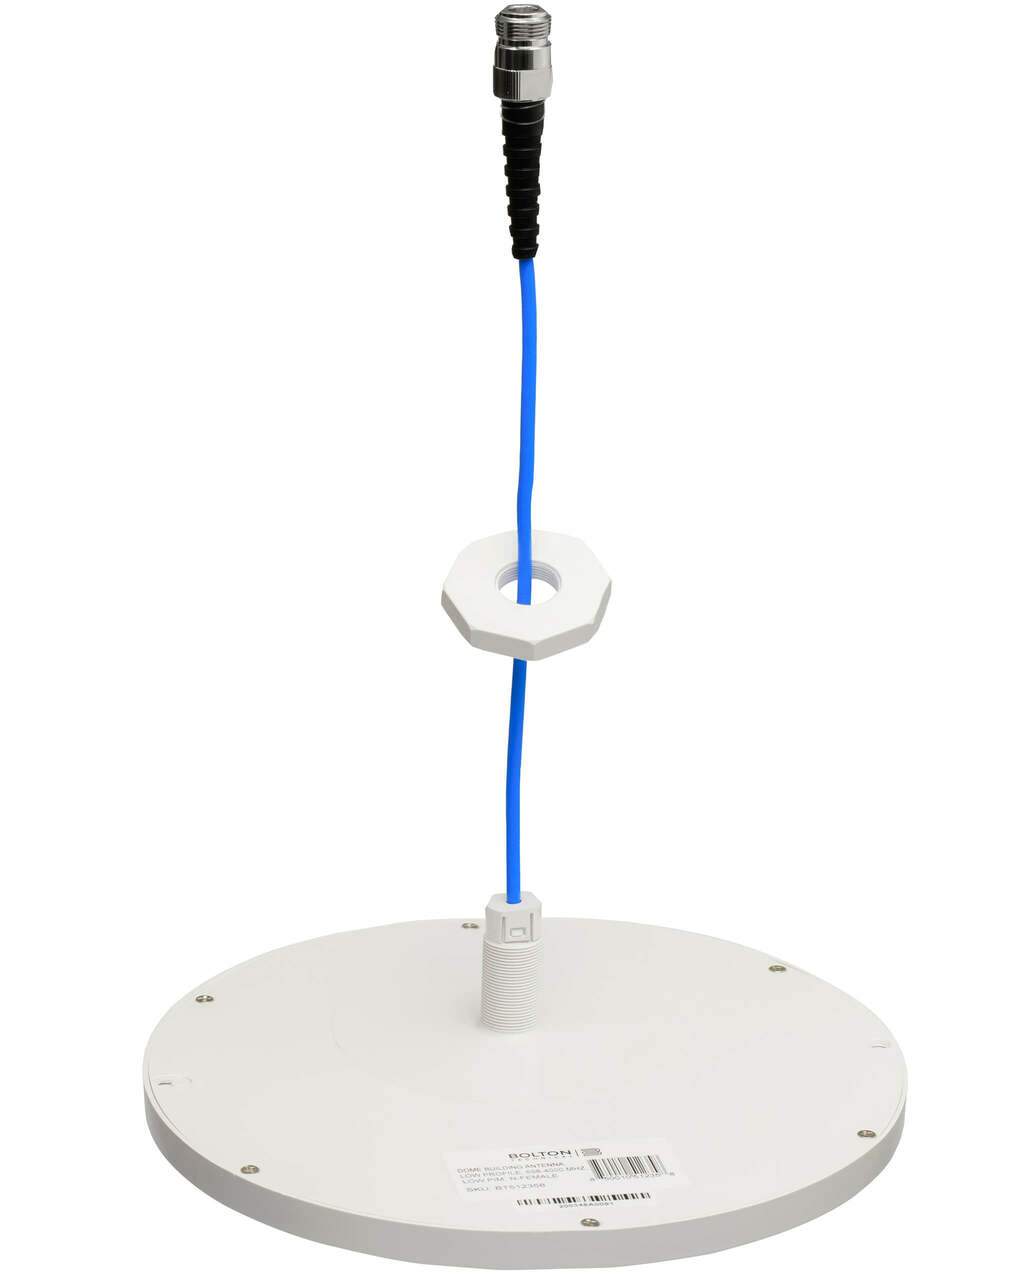 The Rondo 4G Low-Profile Dome Antenna